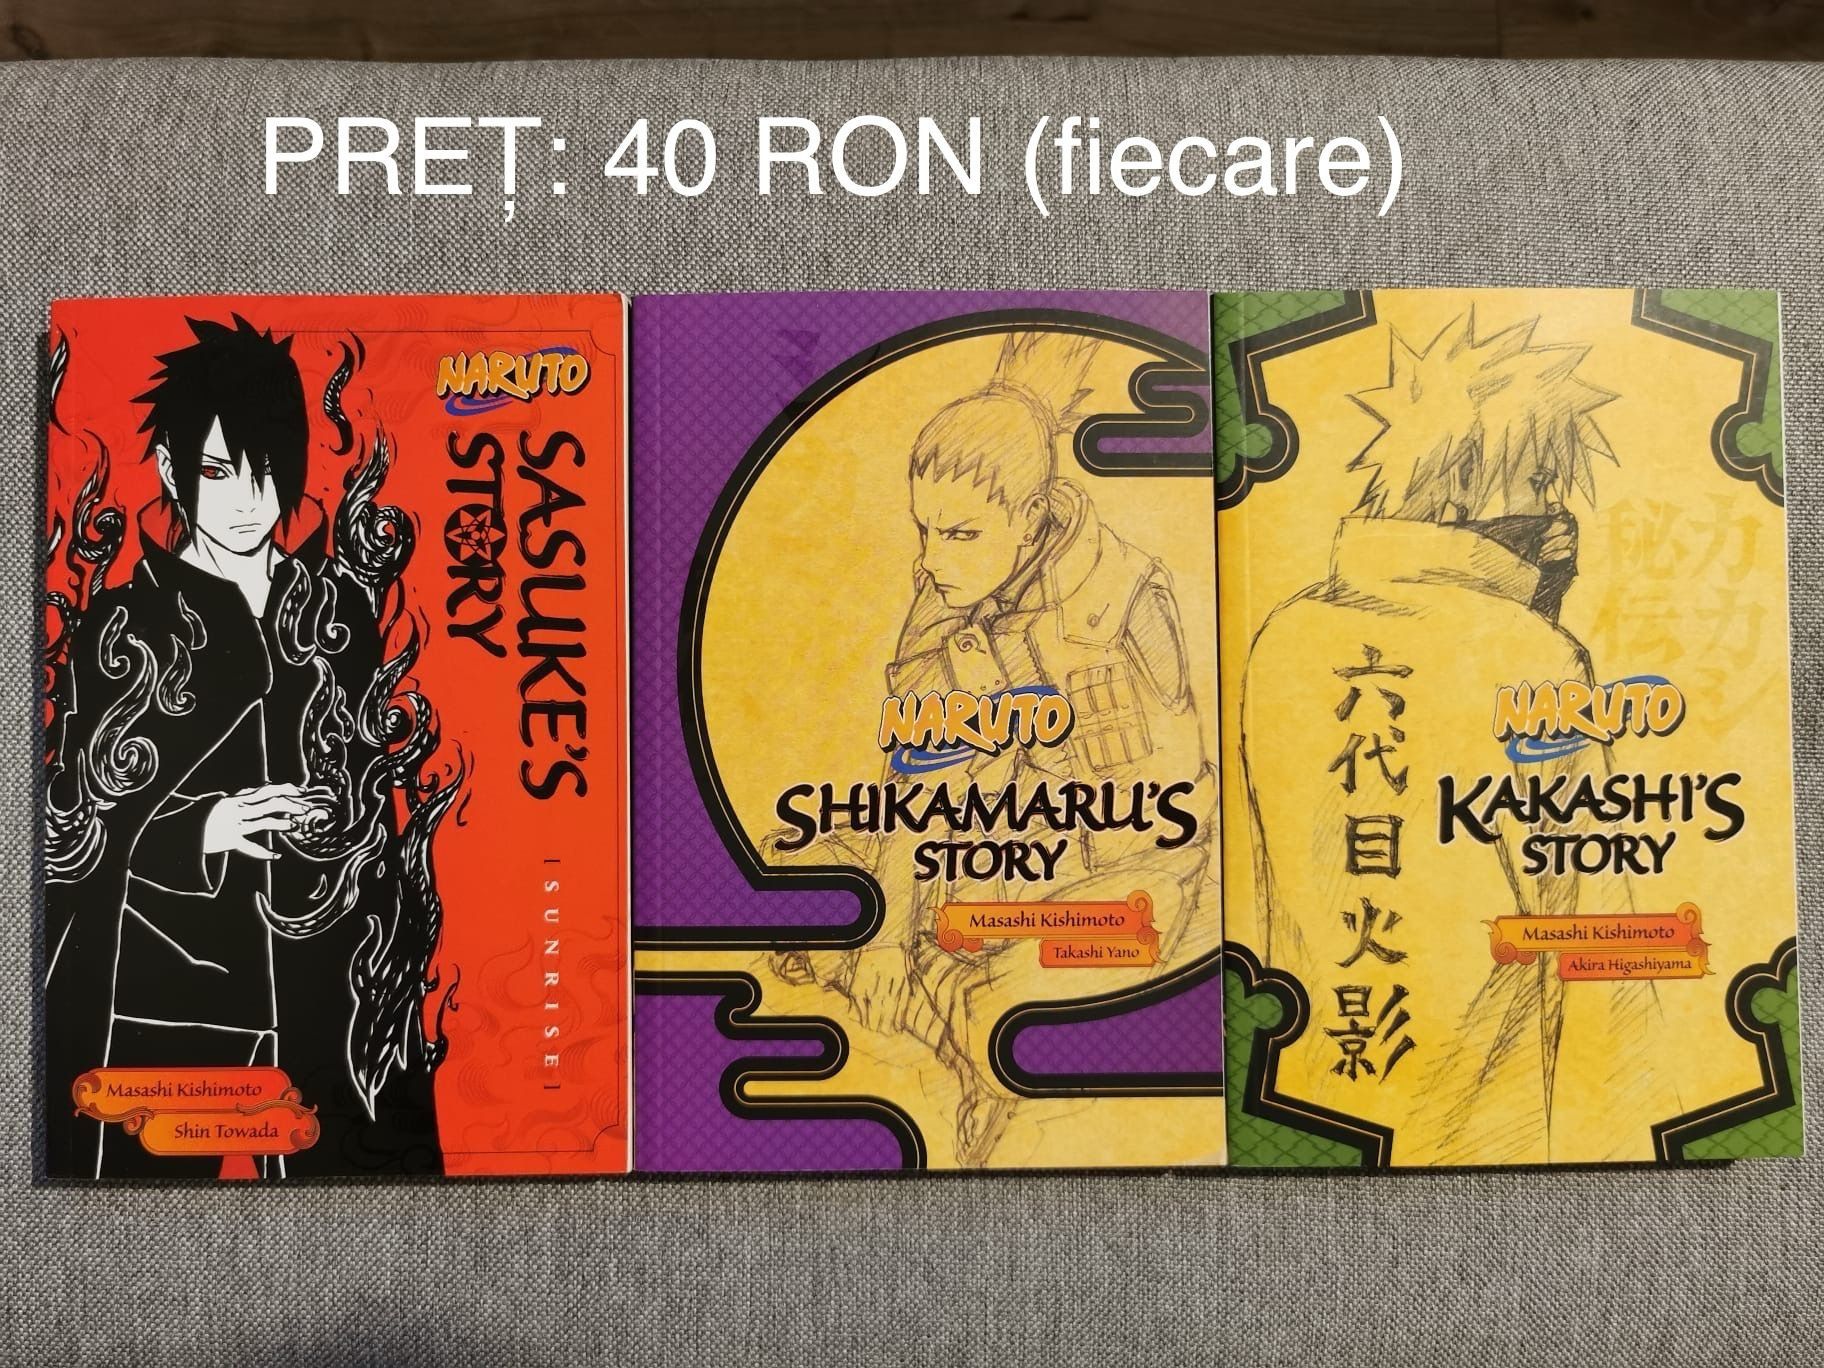 Colecție Naruto preț 40 lei fiecare carte